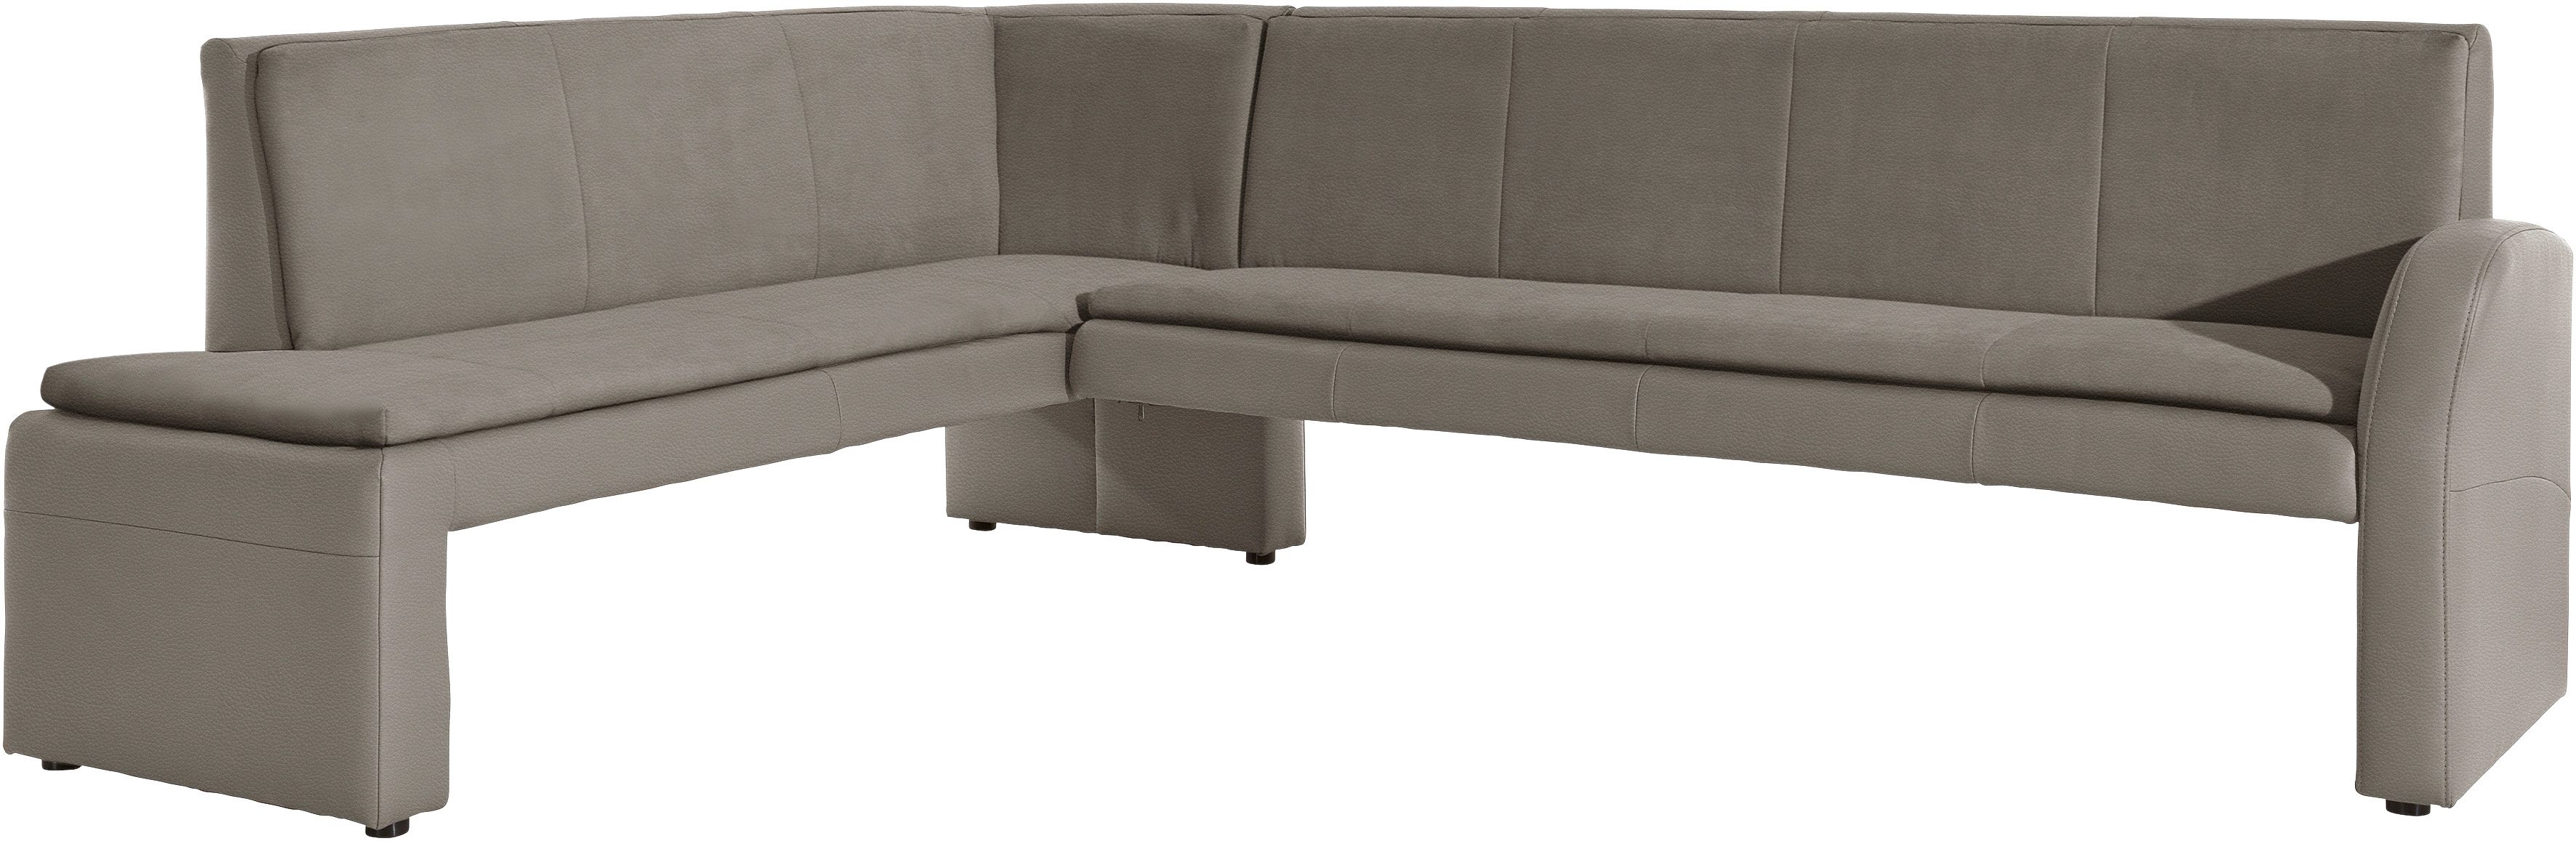 exxpo sofa fashion Hoekbank Cortado Vrij verstelbaar in de kamer